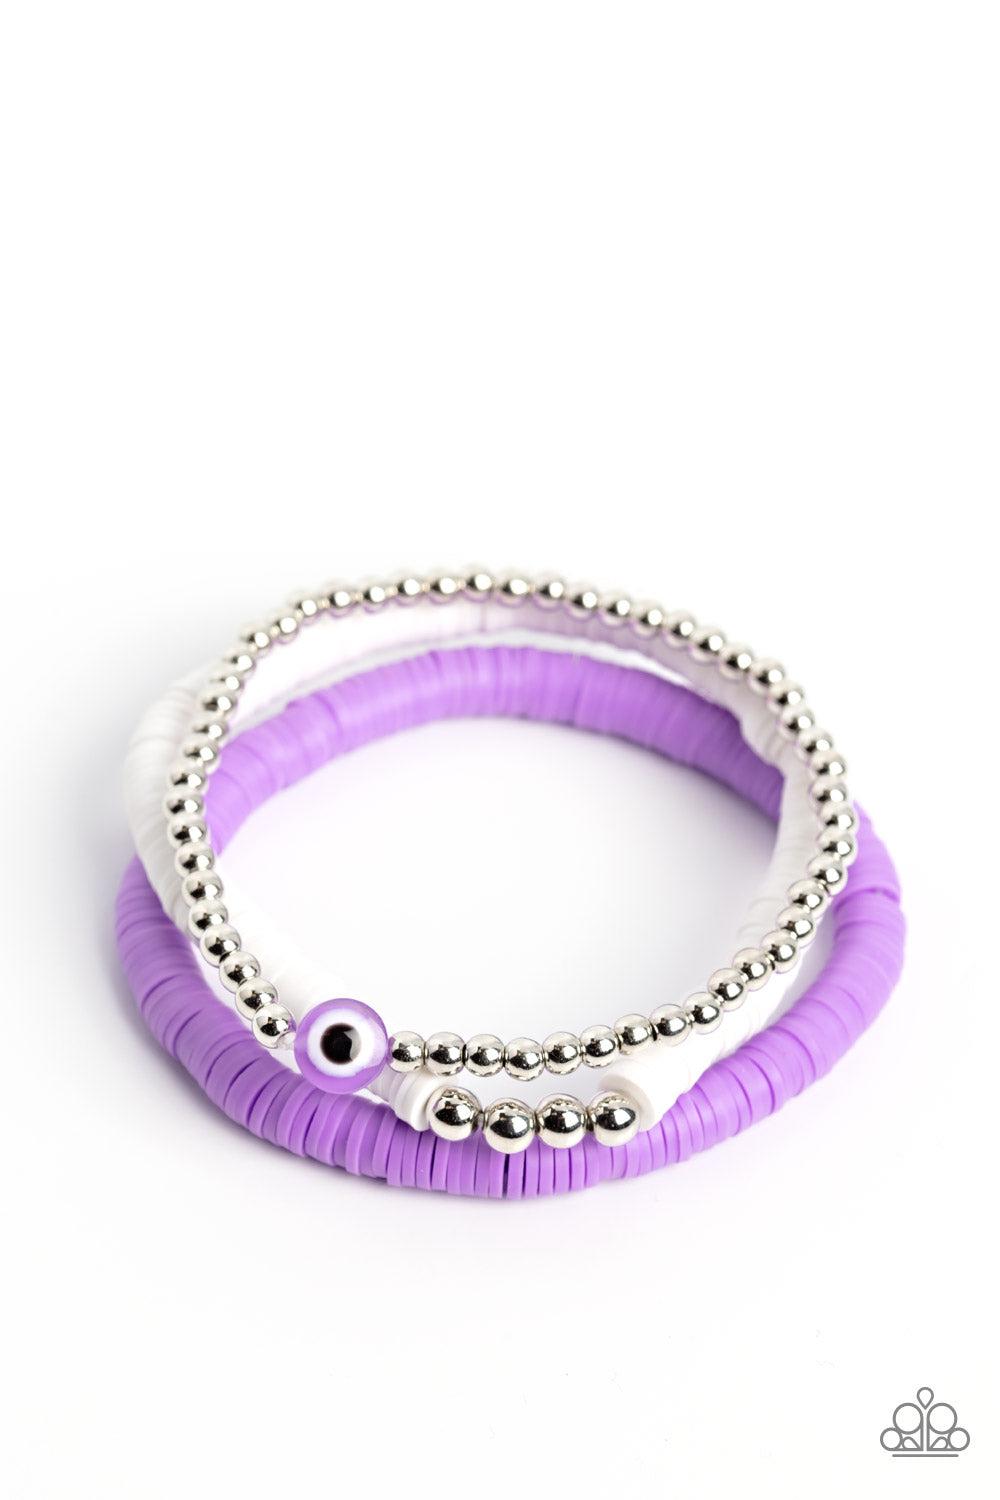 EYE Have A Dream Purple Bracelet - Paparazzi Accessories- lightbox - CarasShop.com - $5 Jewelry by Cara Jewels